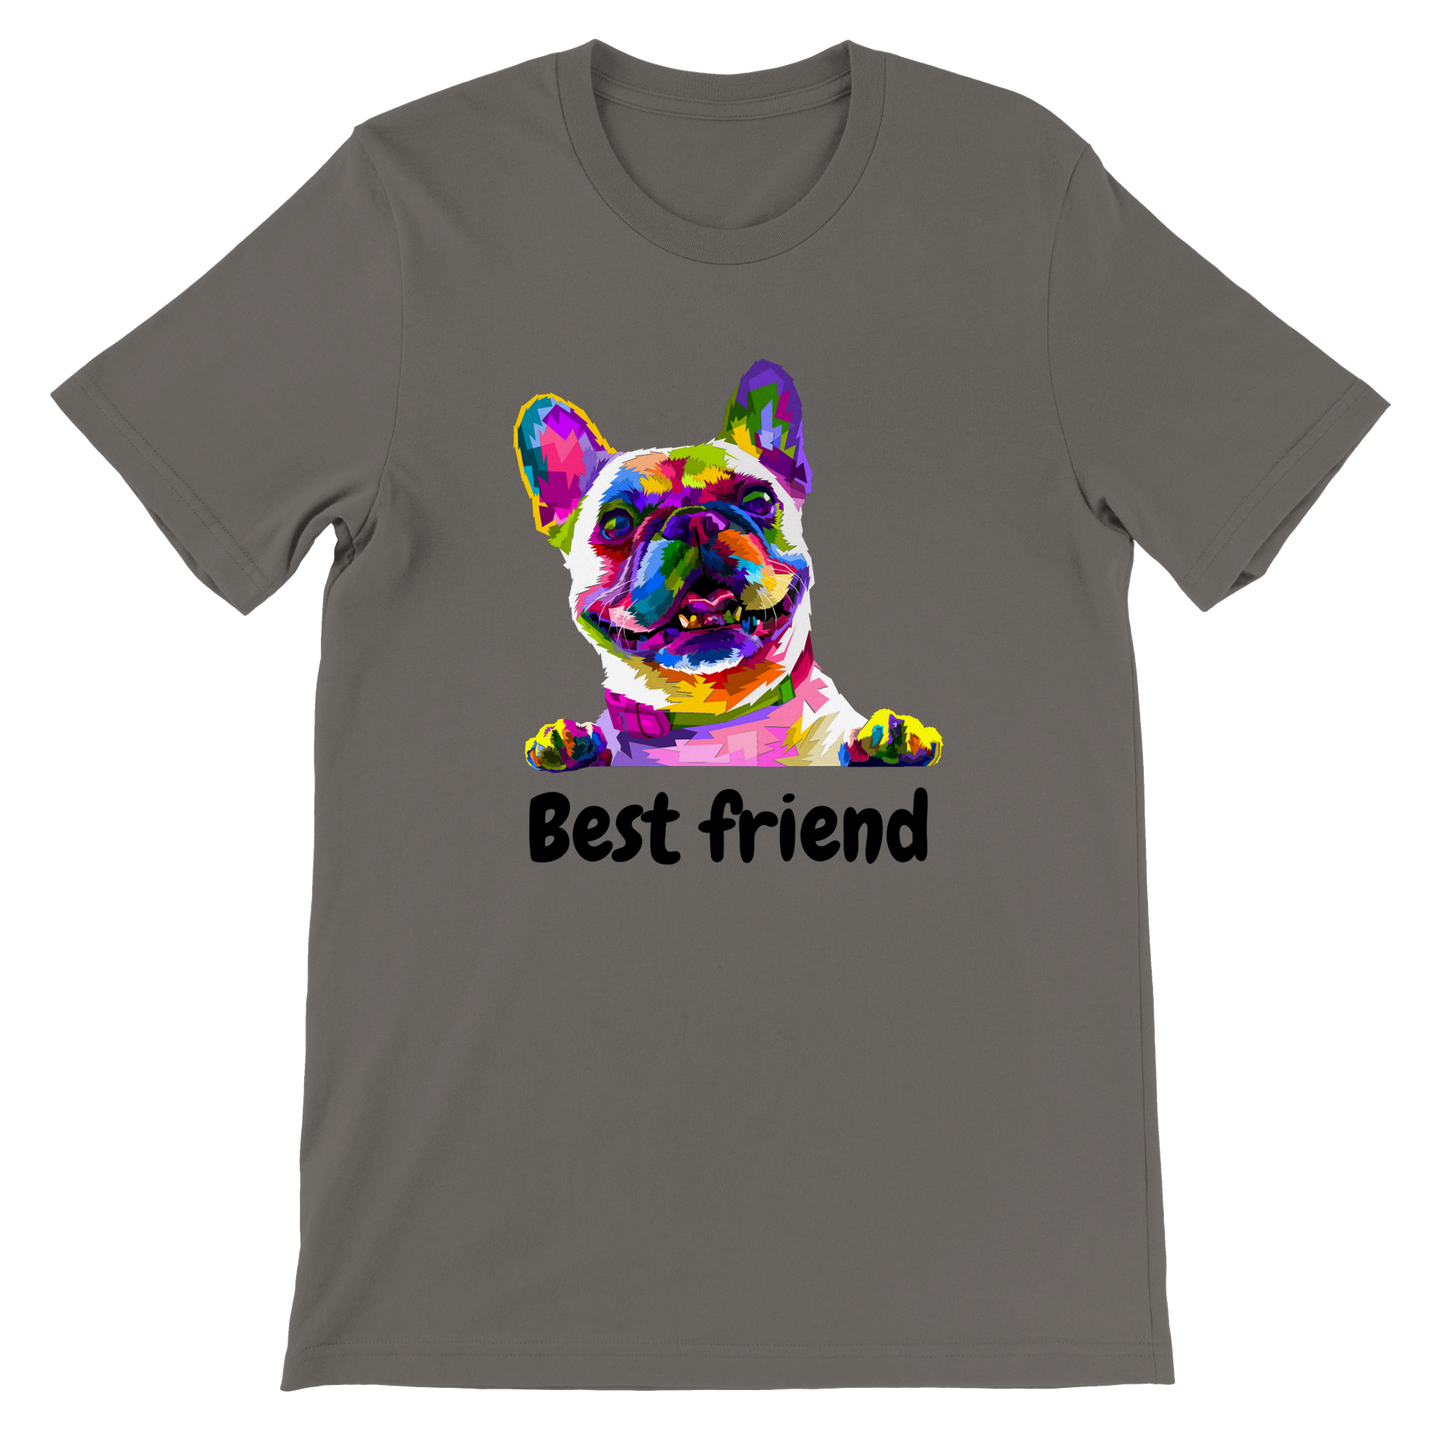 Best friend Premium Unisex Crewneck T-shirt